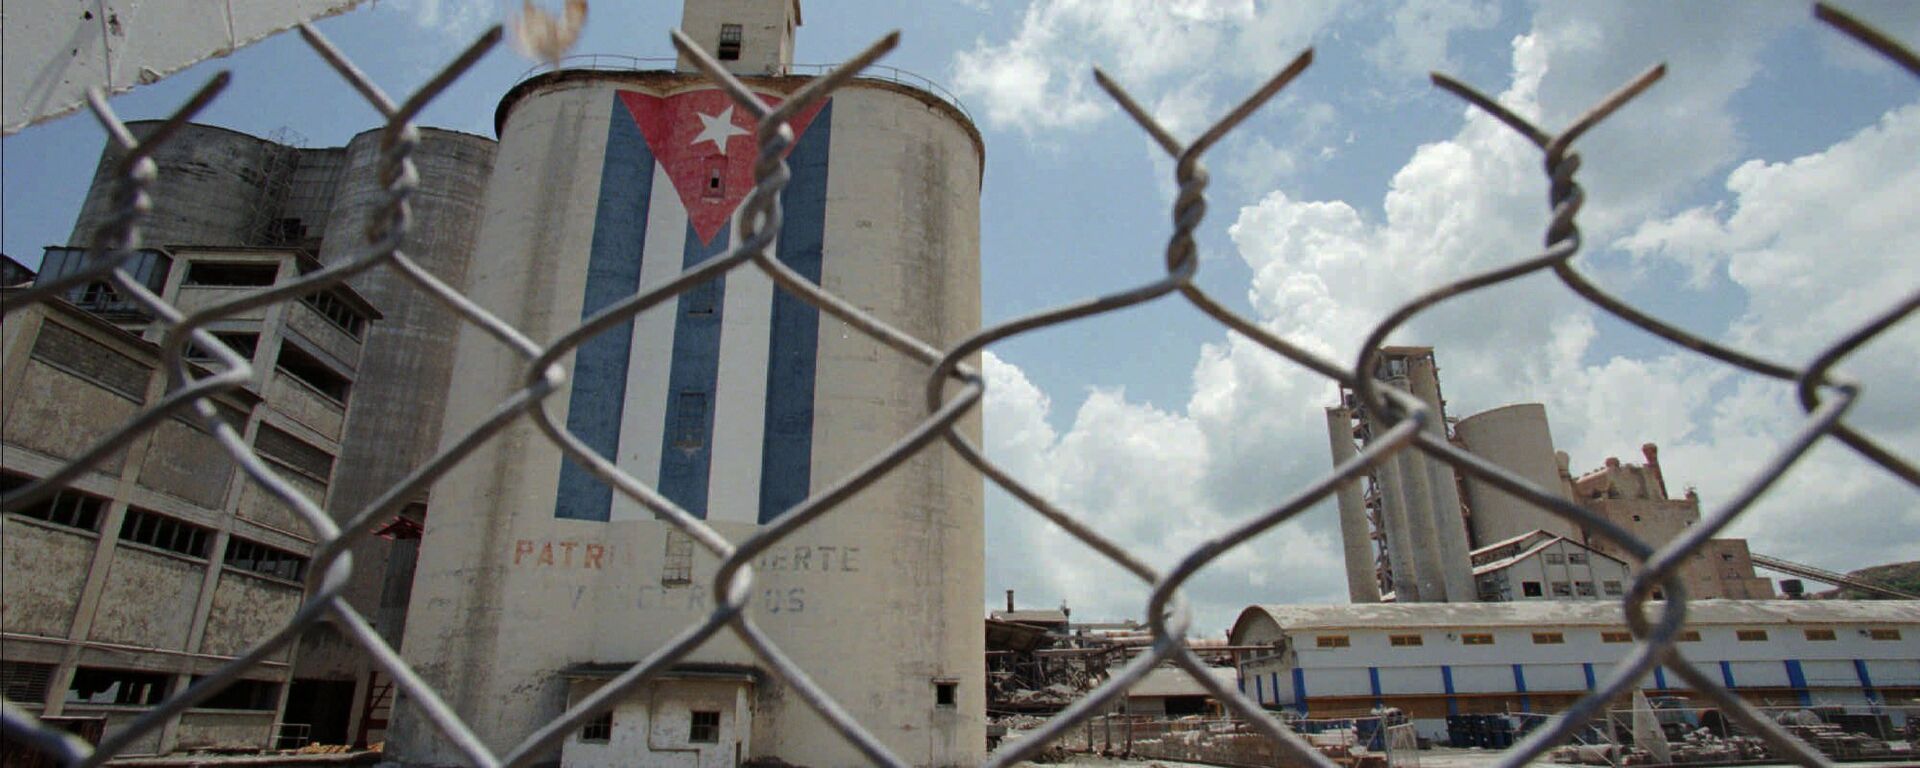 Bandera de Cuba - Sputnik Mundo, 1920, 15.07.2021